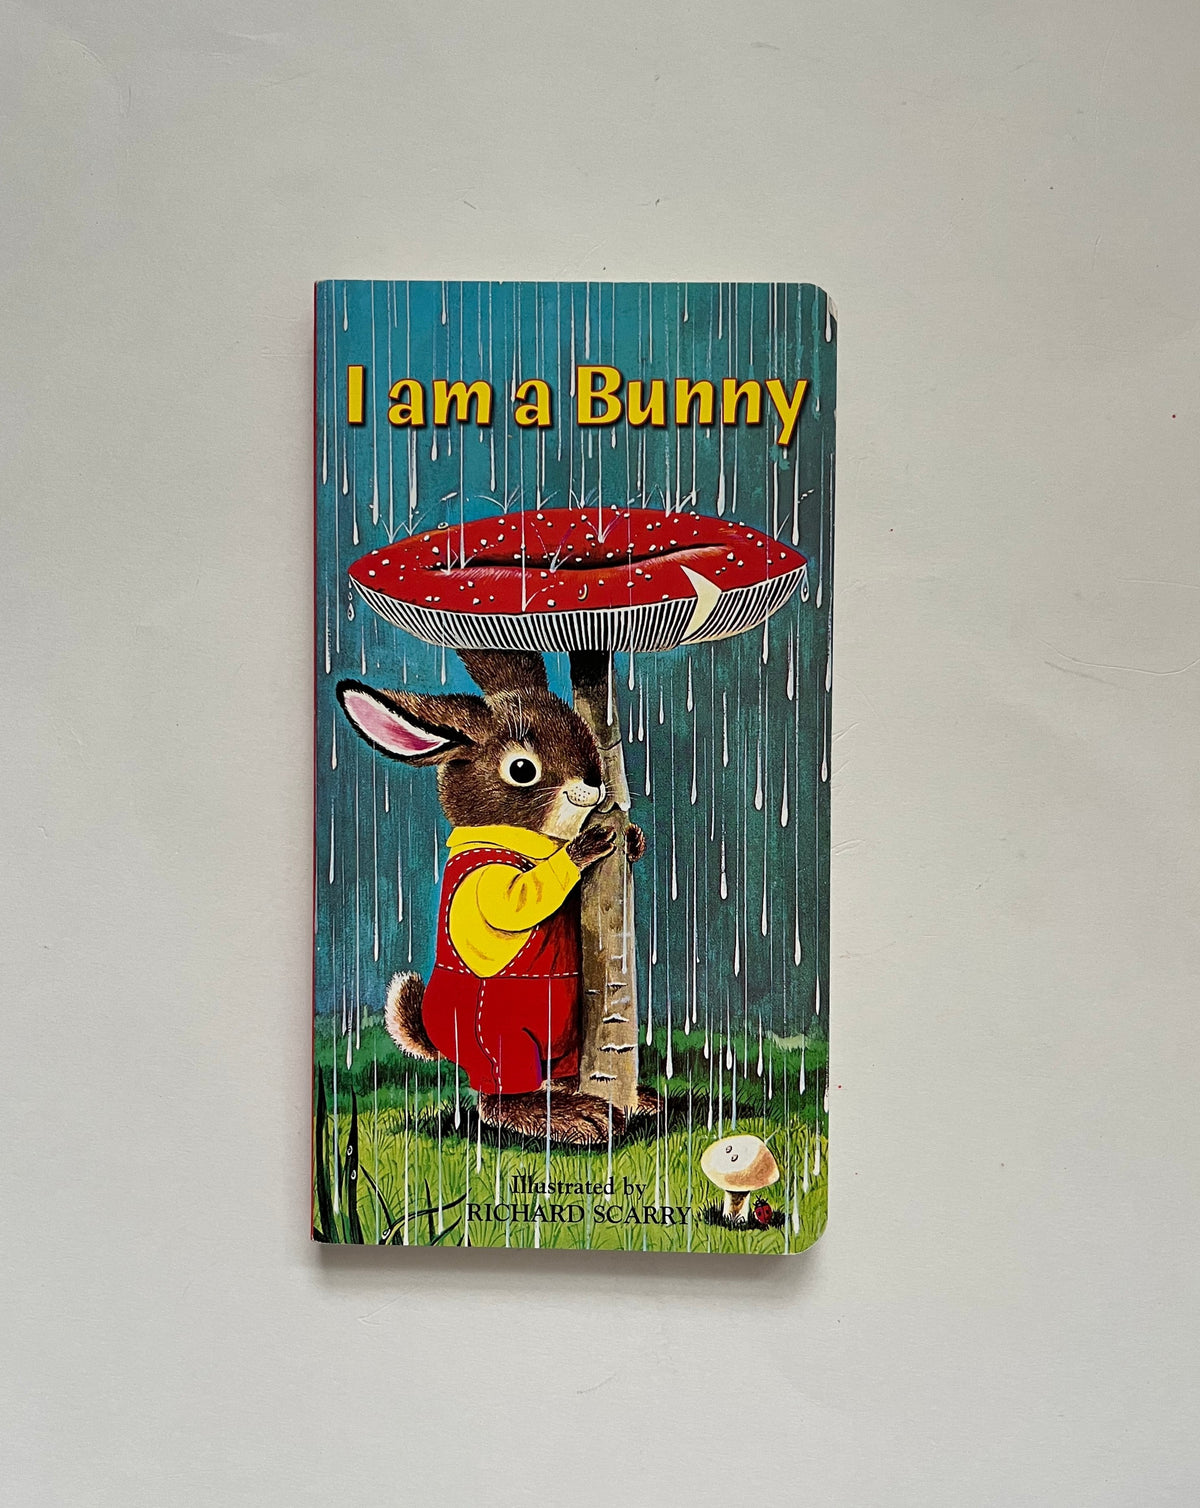 I Am a Bunny by Richard Scarry